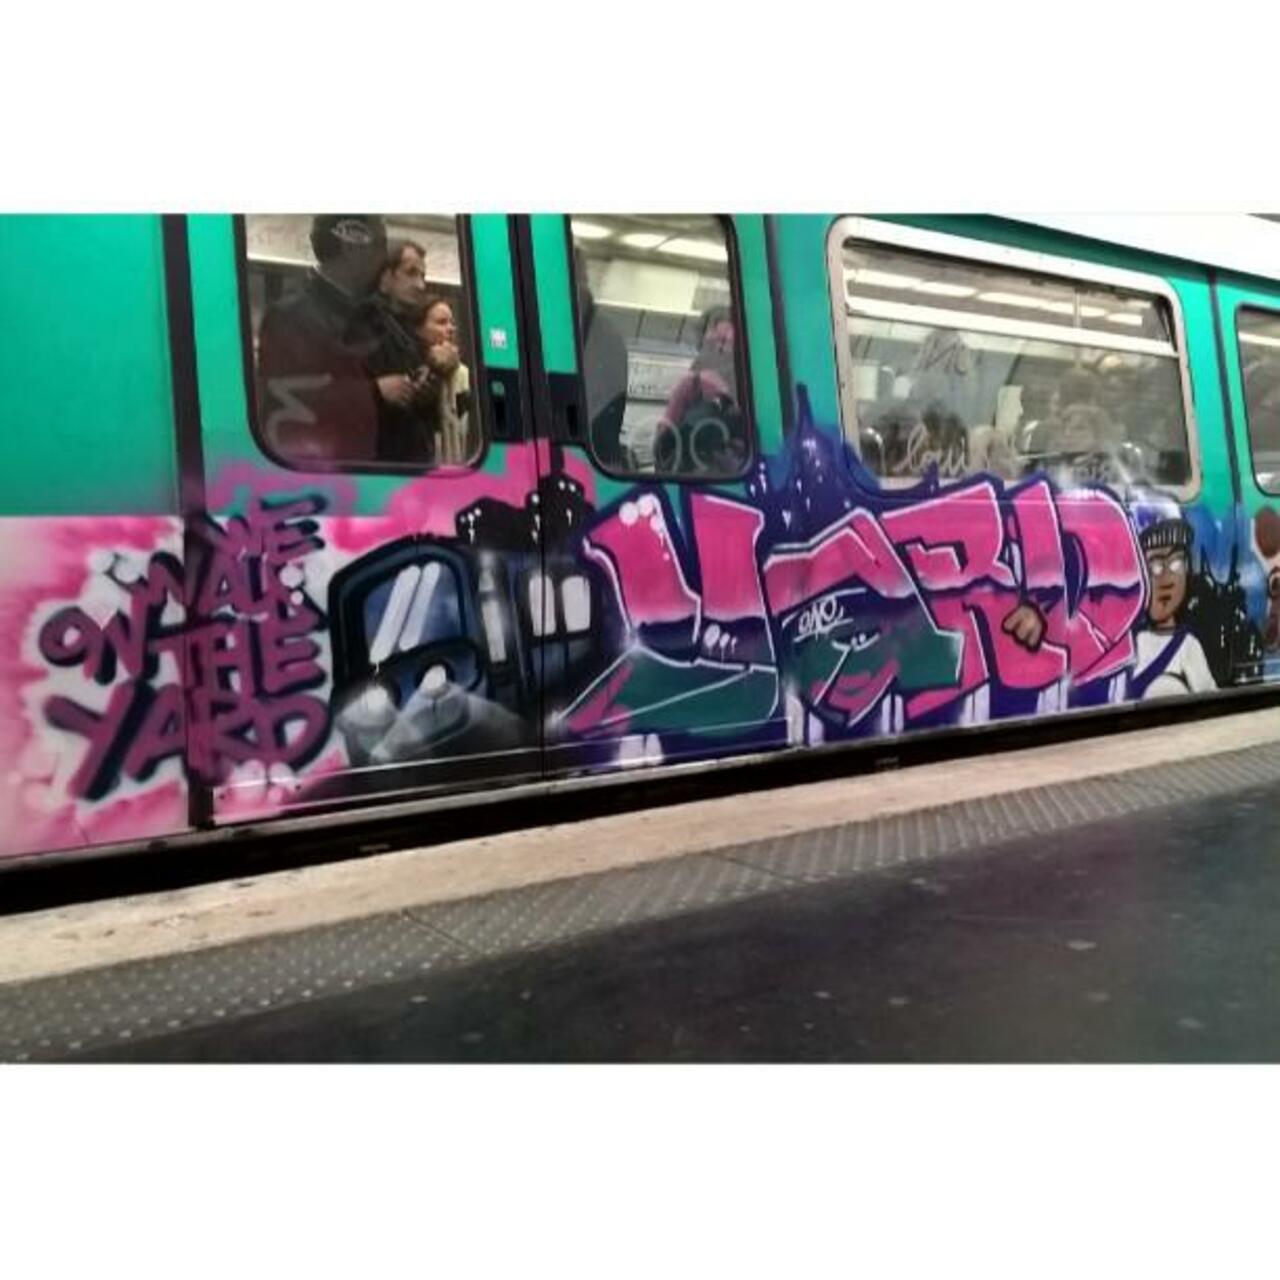 RT @RelaxInParis: circumjacent_fr: #Paris #graffiti photo by maxdimontemarciano http://ift.tt/1NC5w6O #StreetArt http://t.co/1lTwBotbFc